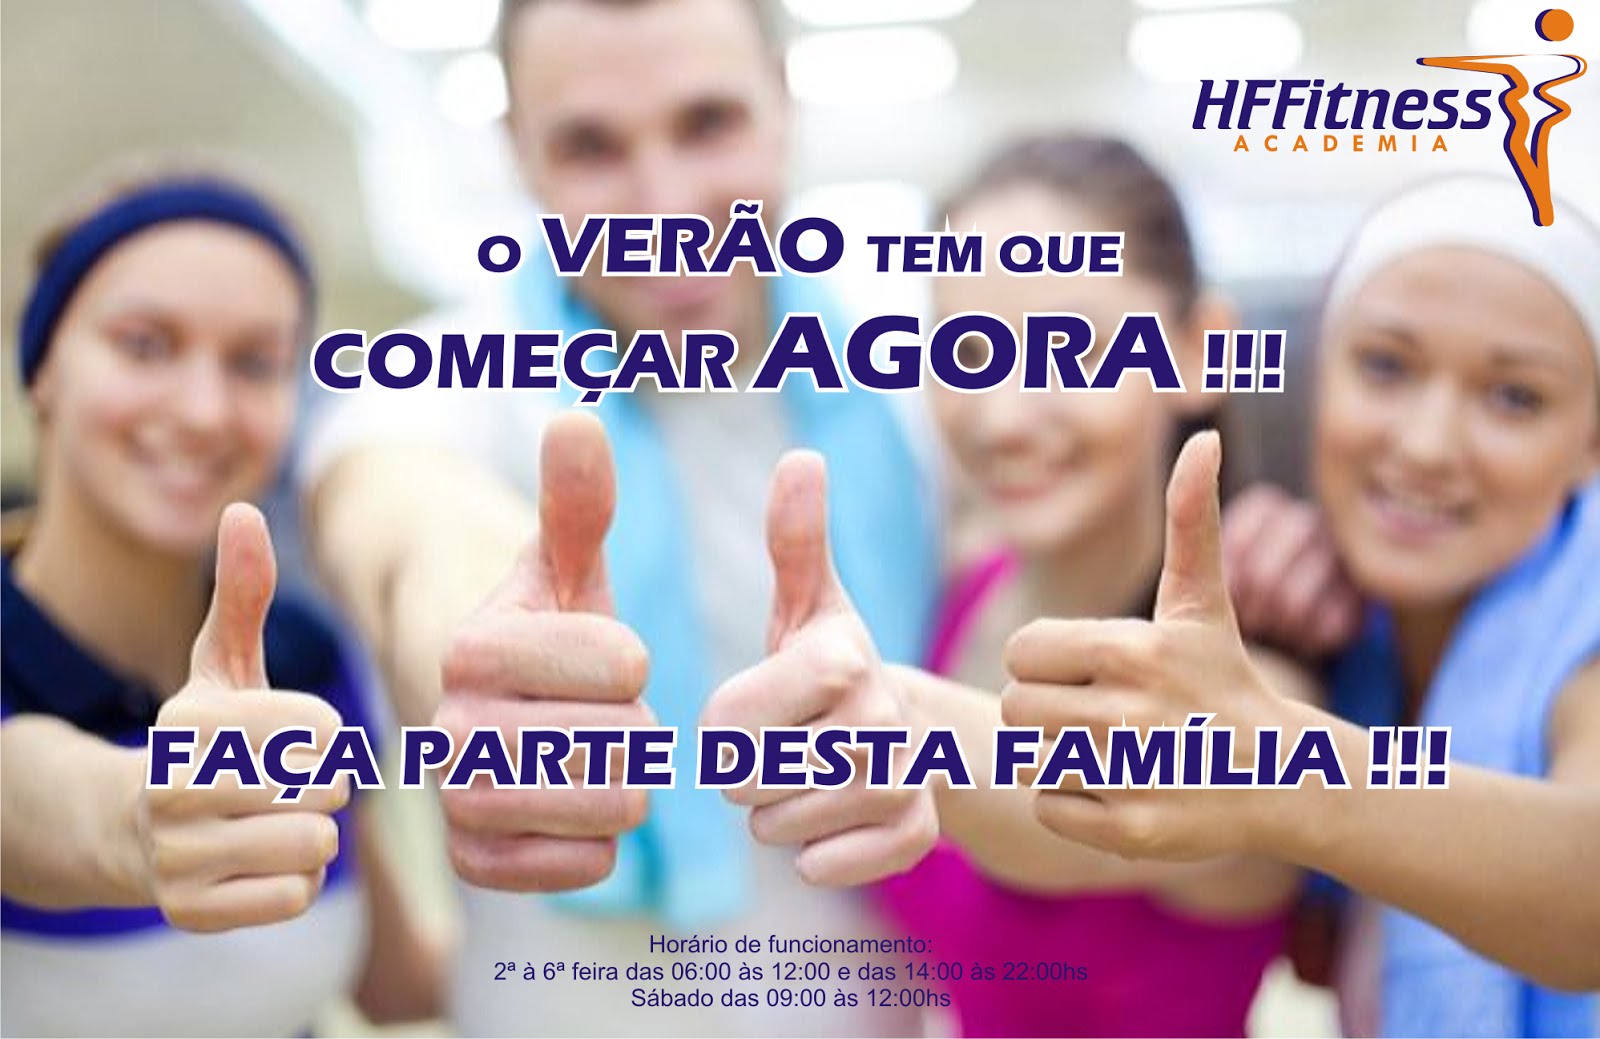 HFFitness - Academia